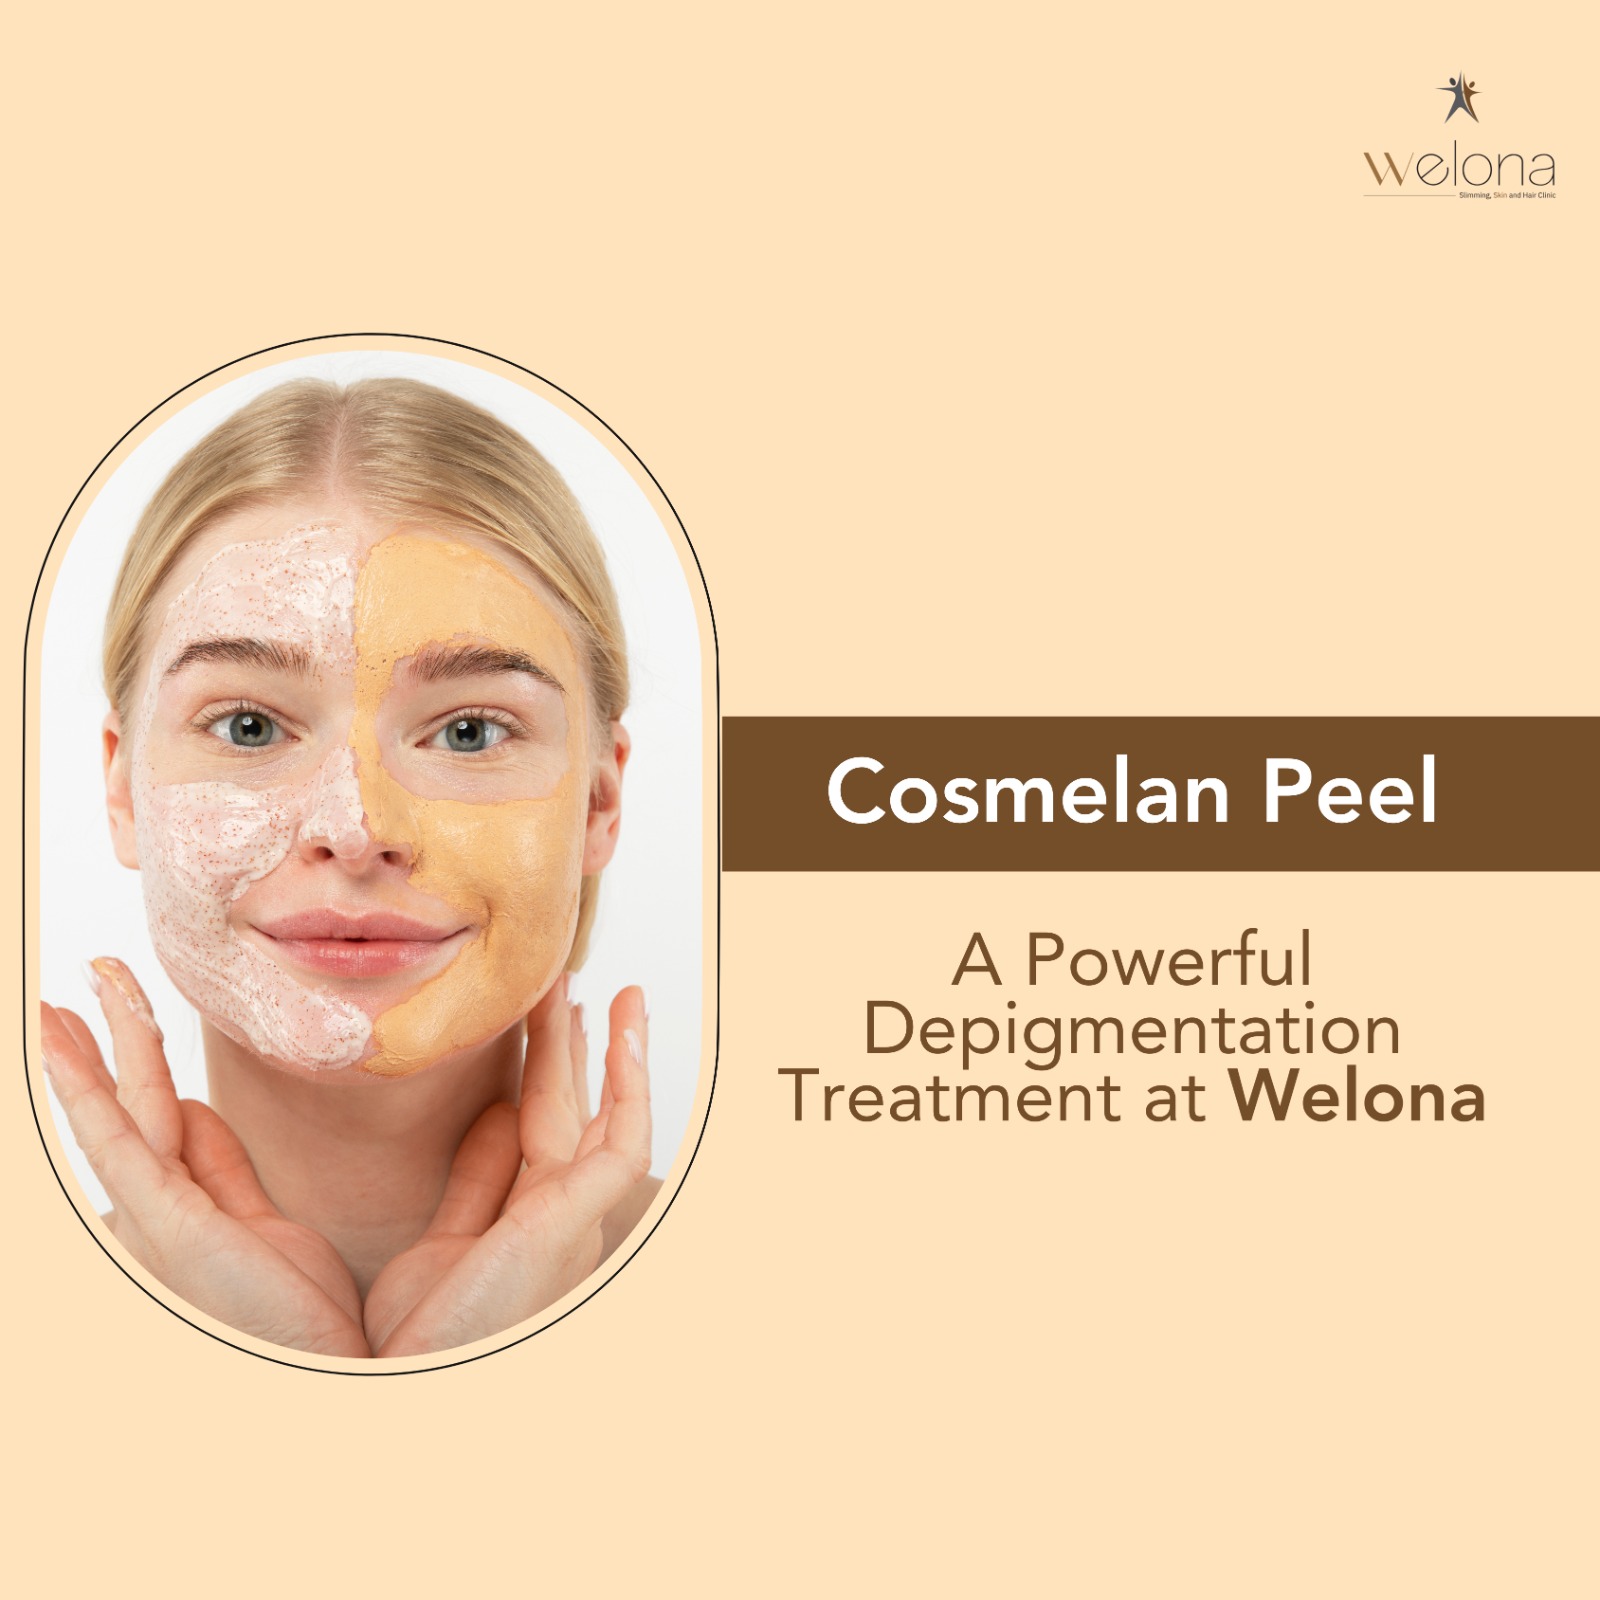 Cosmelan Peel: A Powerful Depigmentation Treatment at Welona